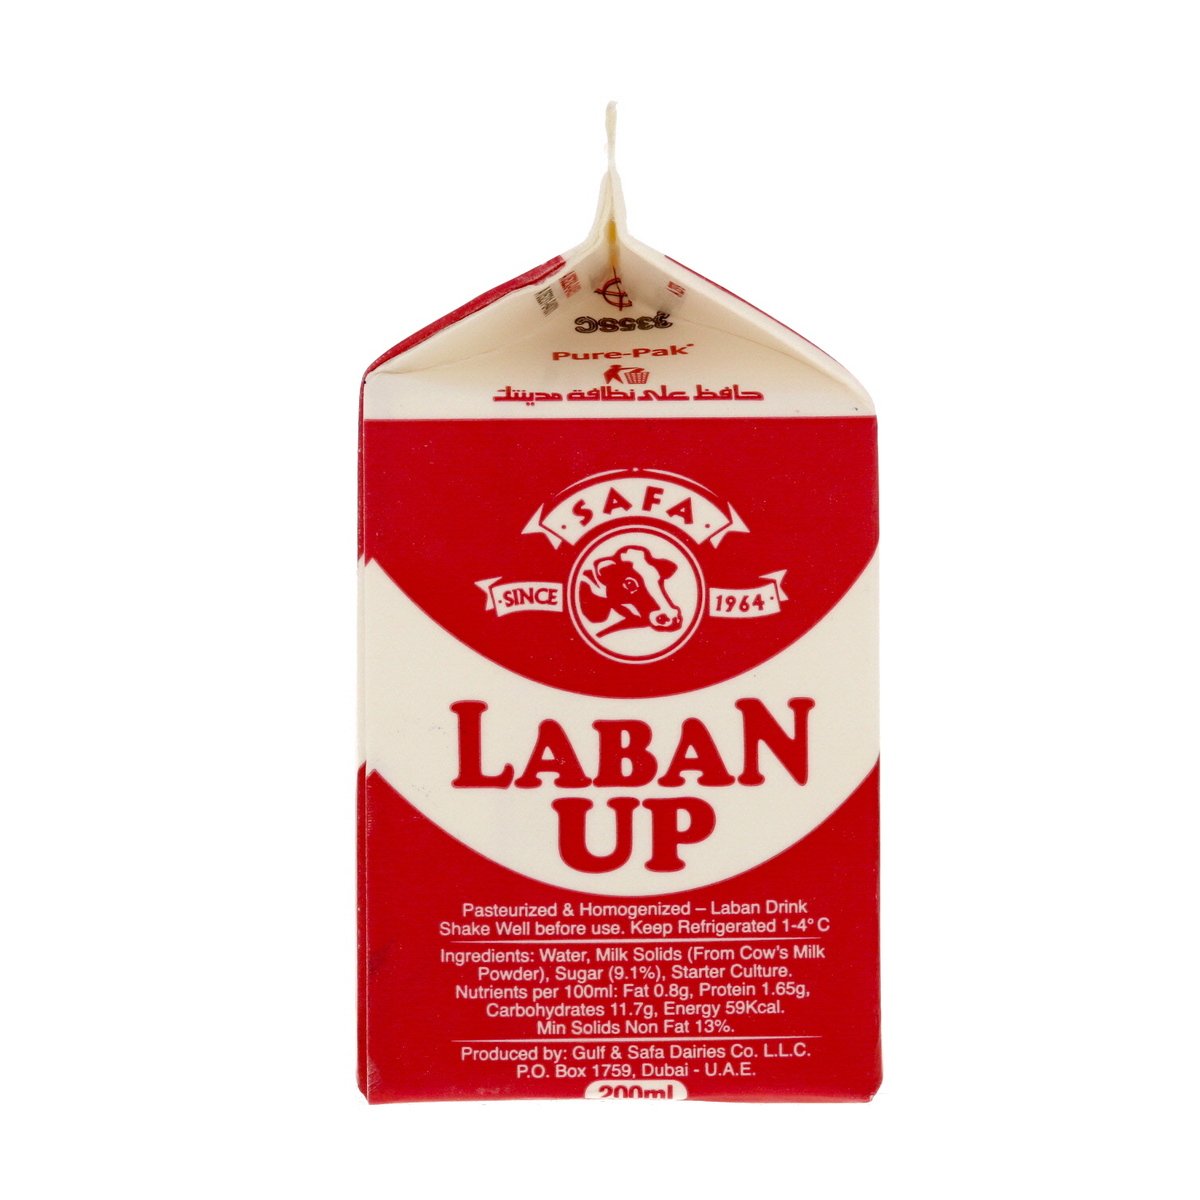 Safa Laban Up Sweet Lassi 12 x 200 ml